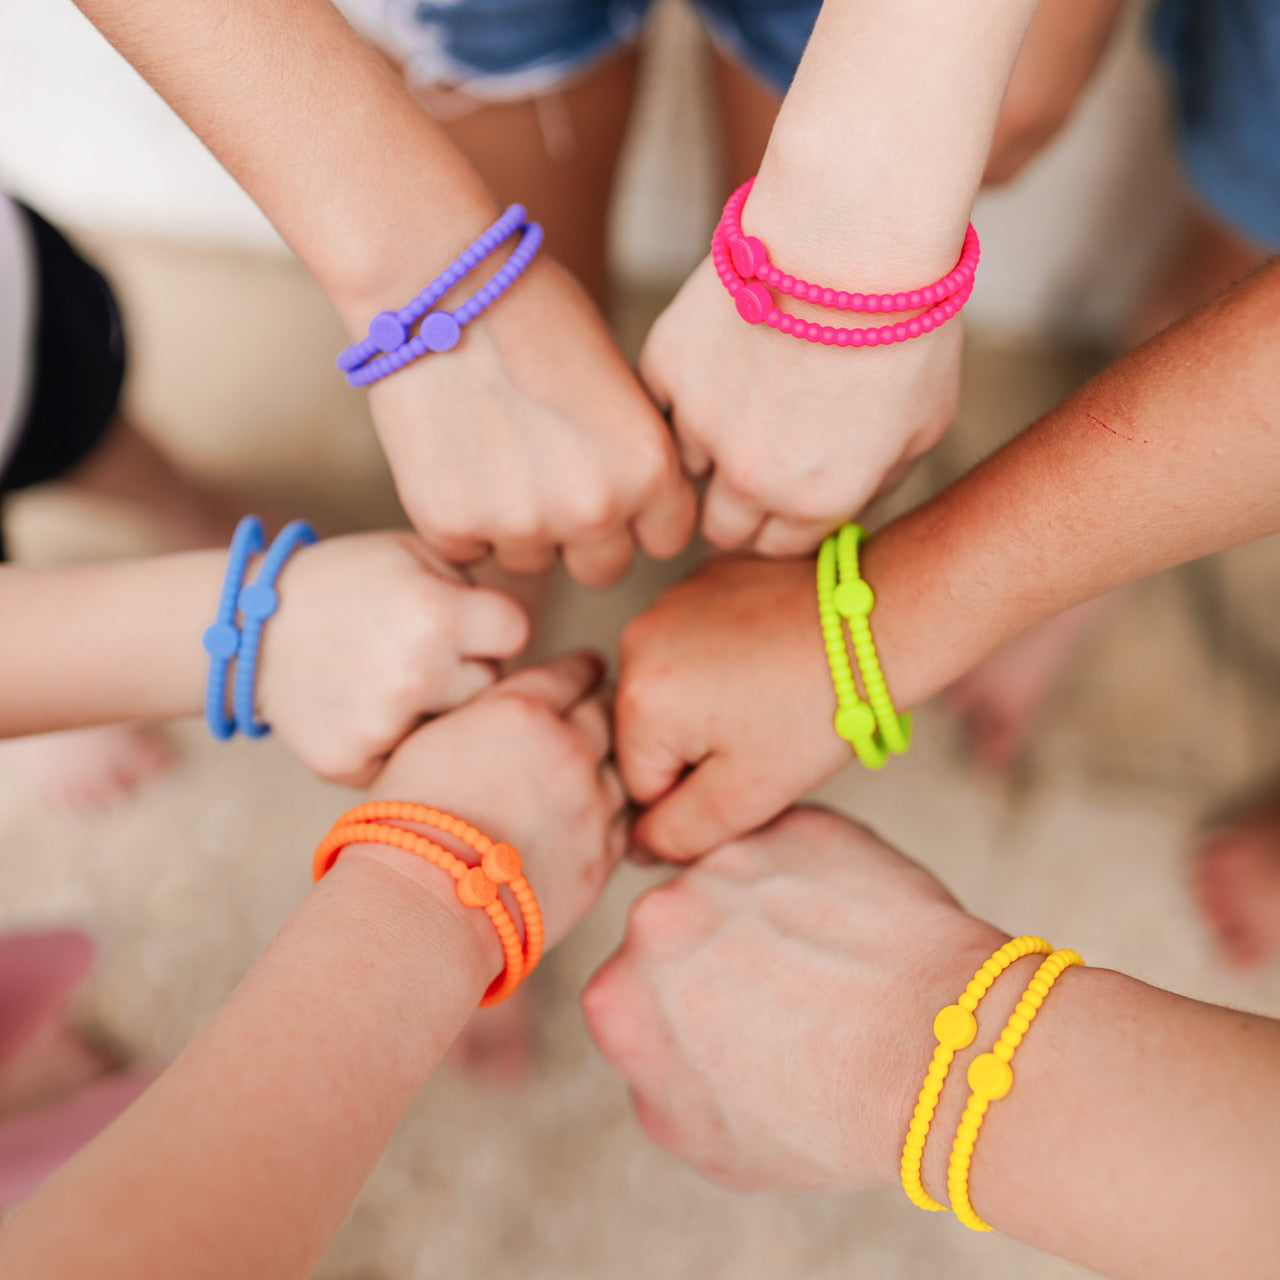 A group of children wearing the Summer 2020 Cutie Bracelets.